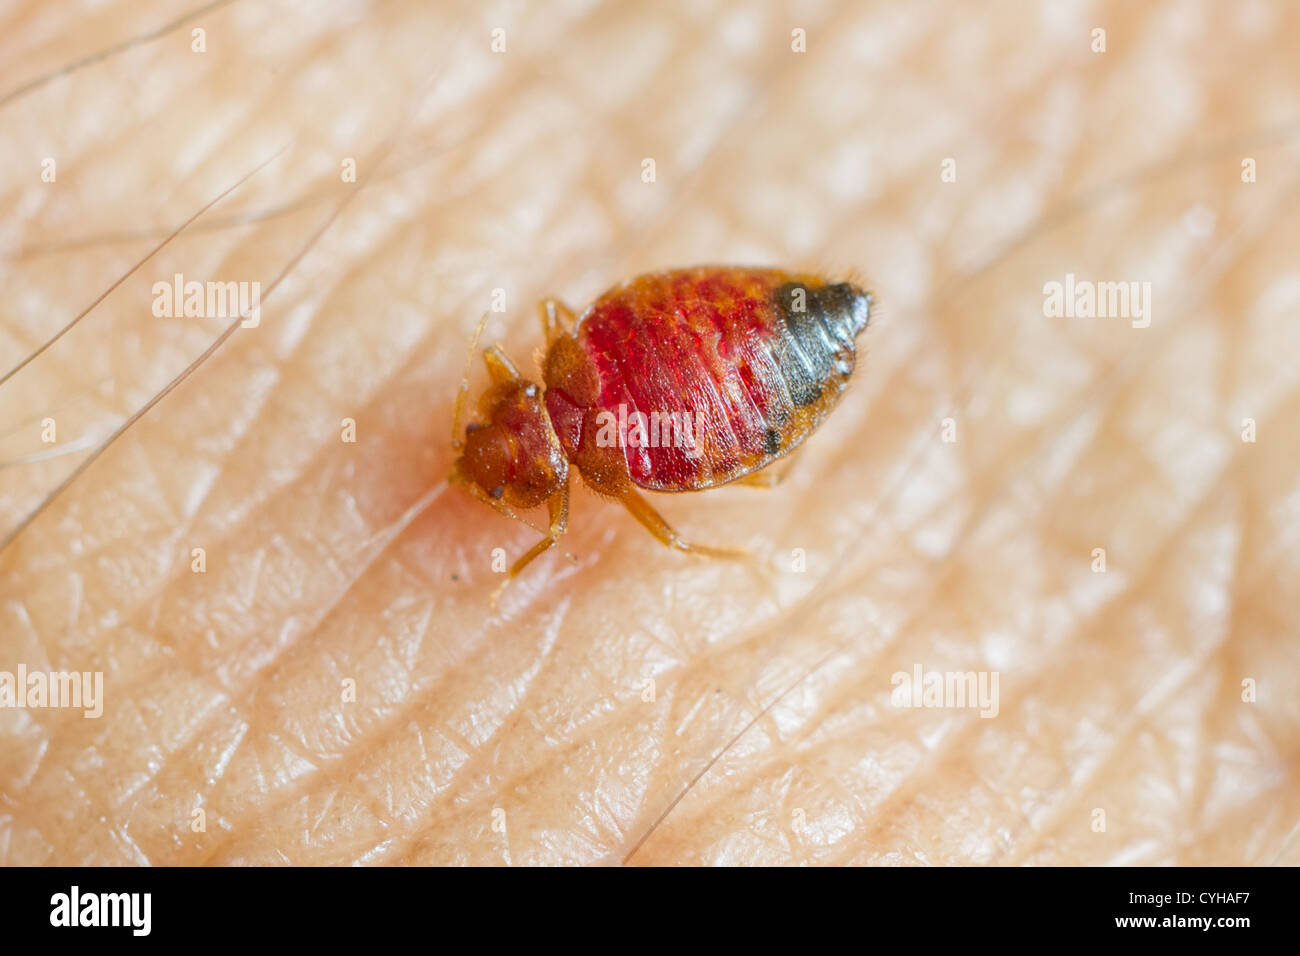 Bed bug feeding on human skin Stock Photo